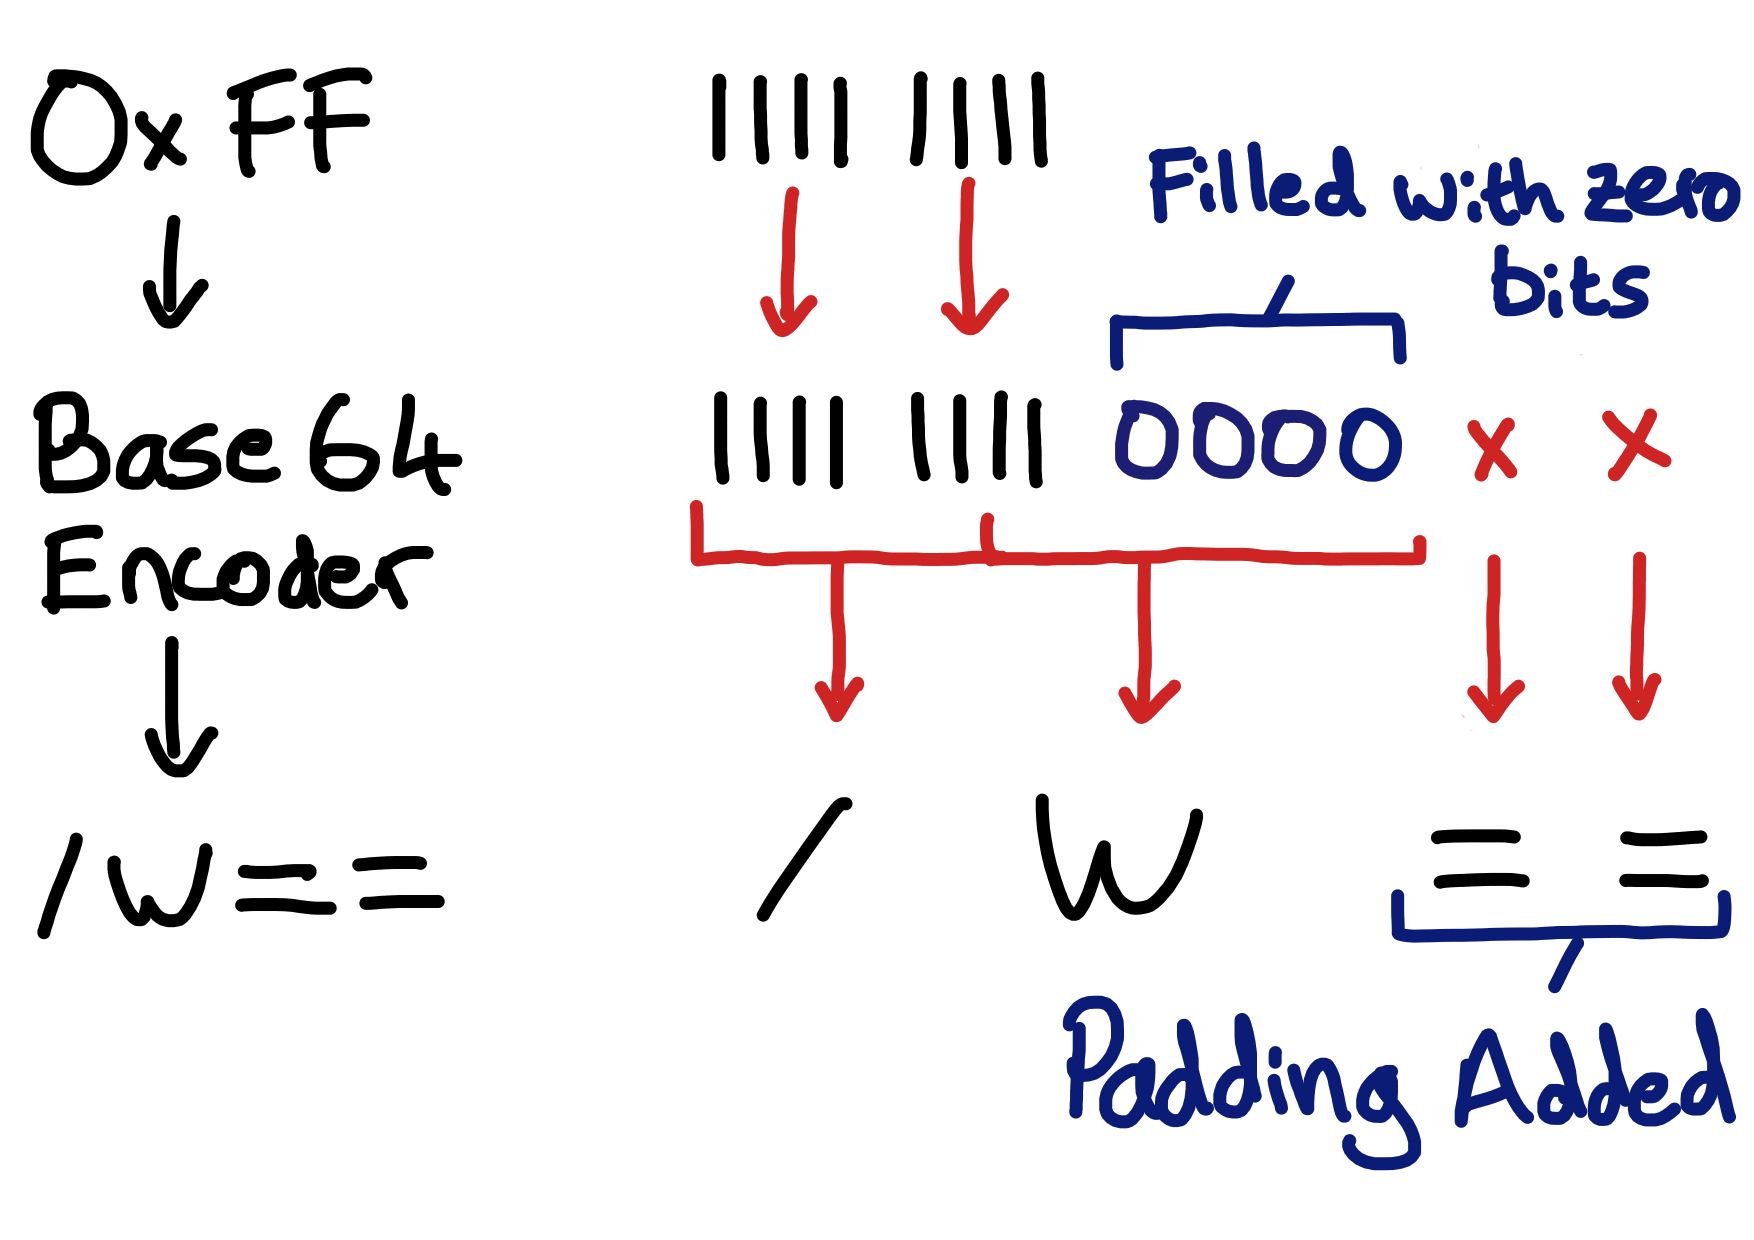 Example of Encoding 0xFF